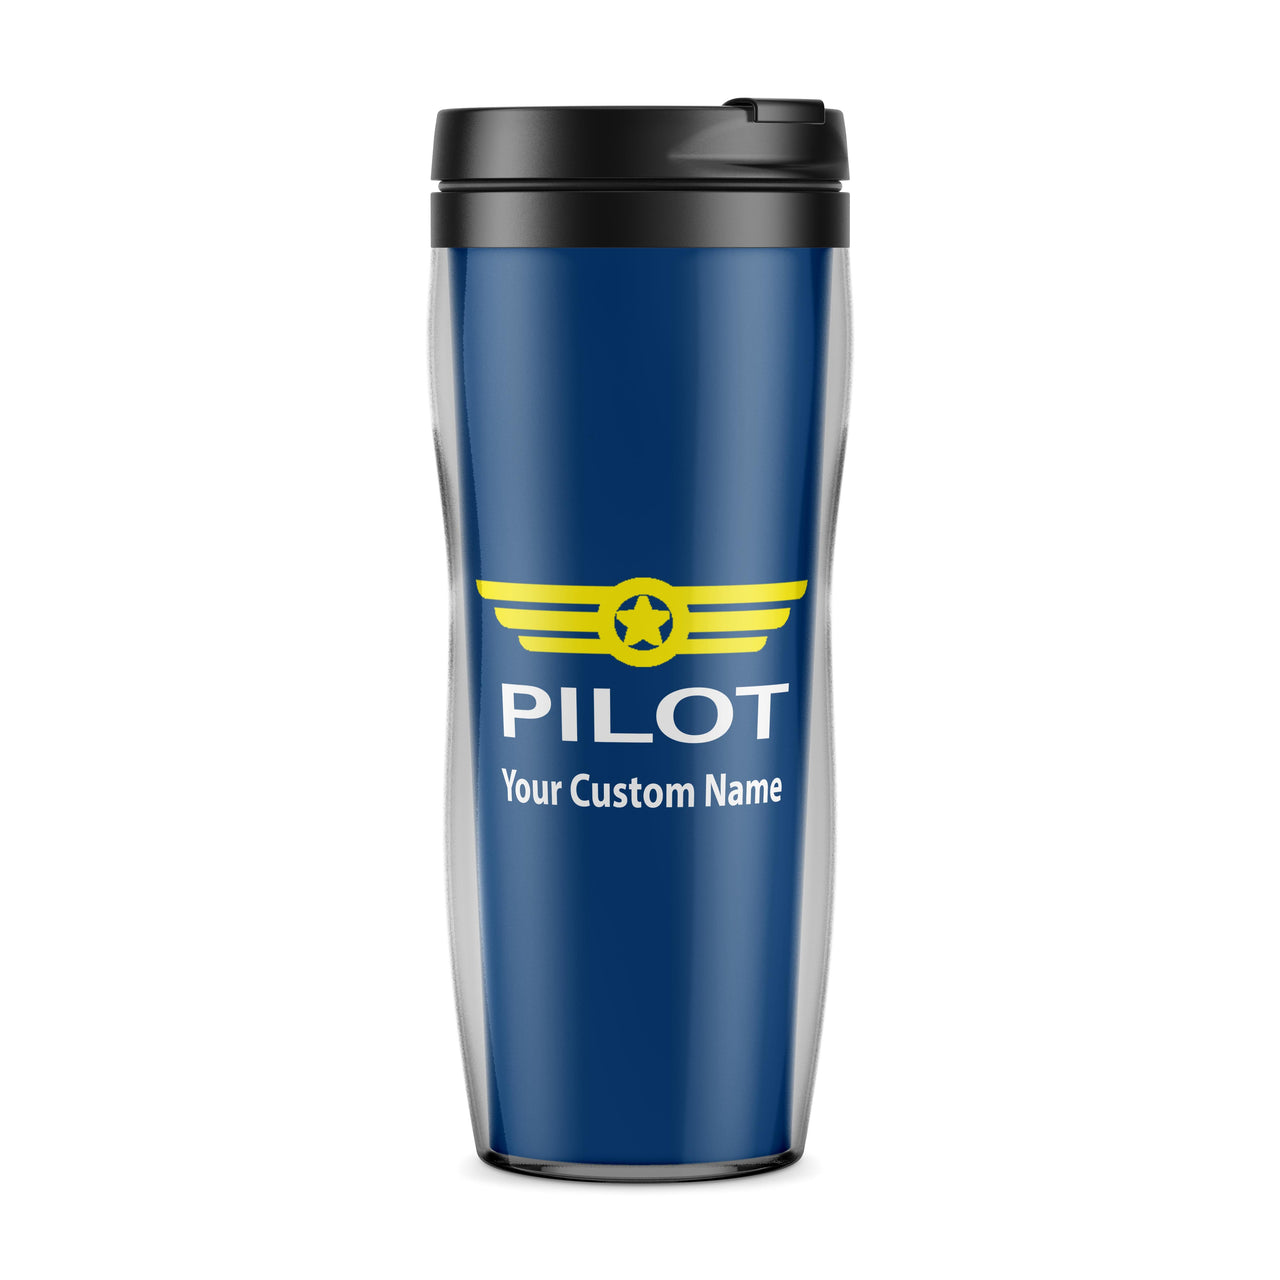 Custom Name & Pilot & Badge Designed Travel Mugs